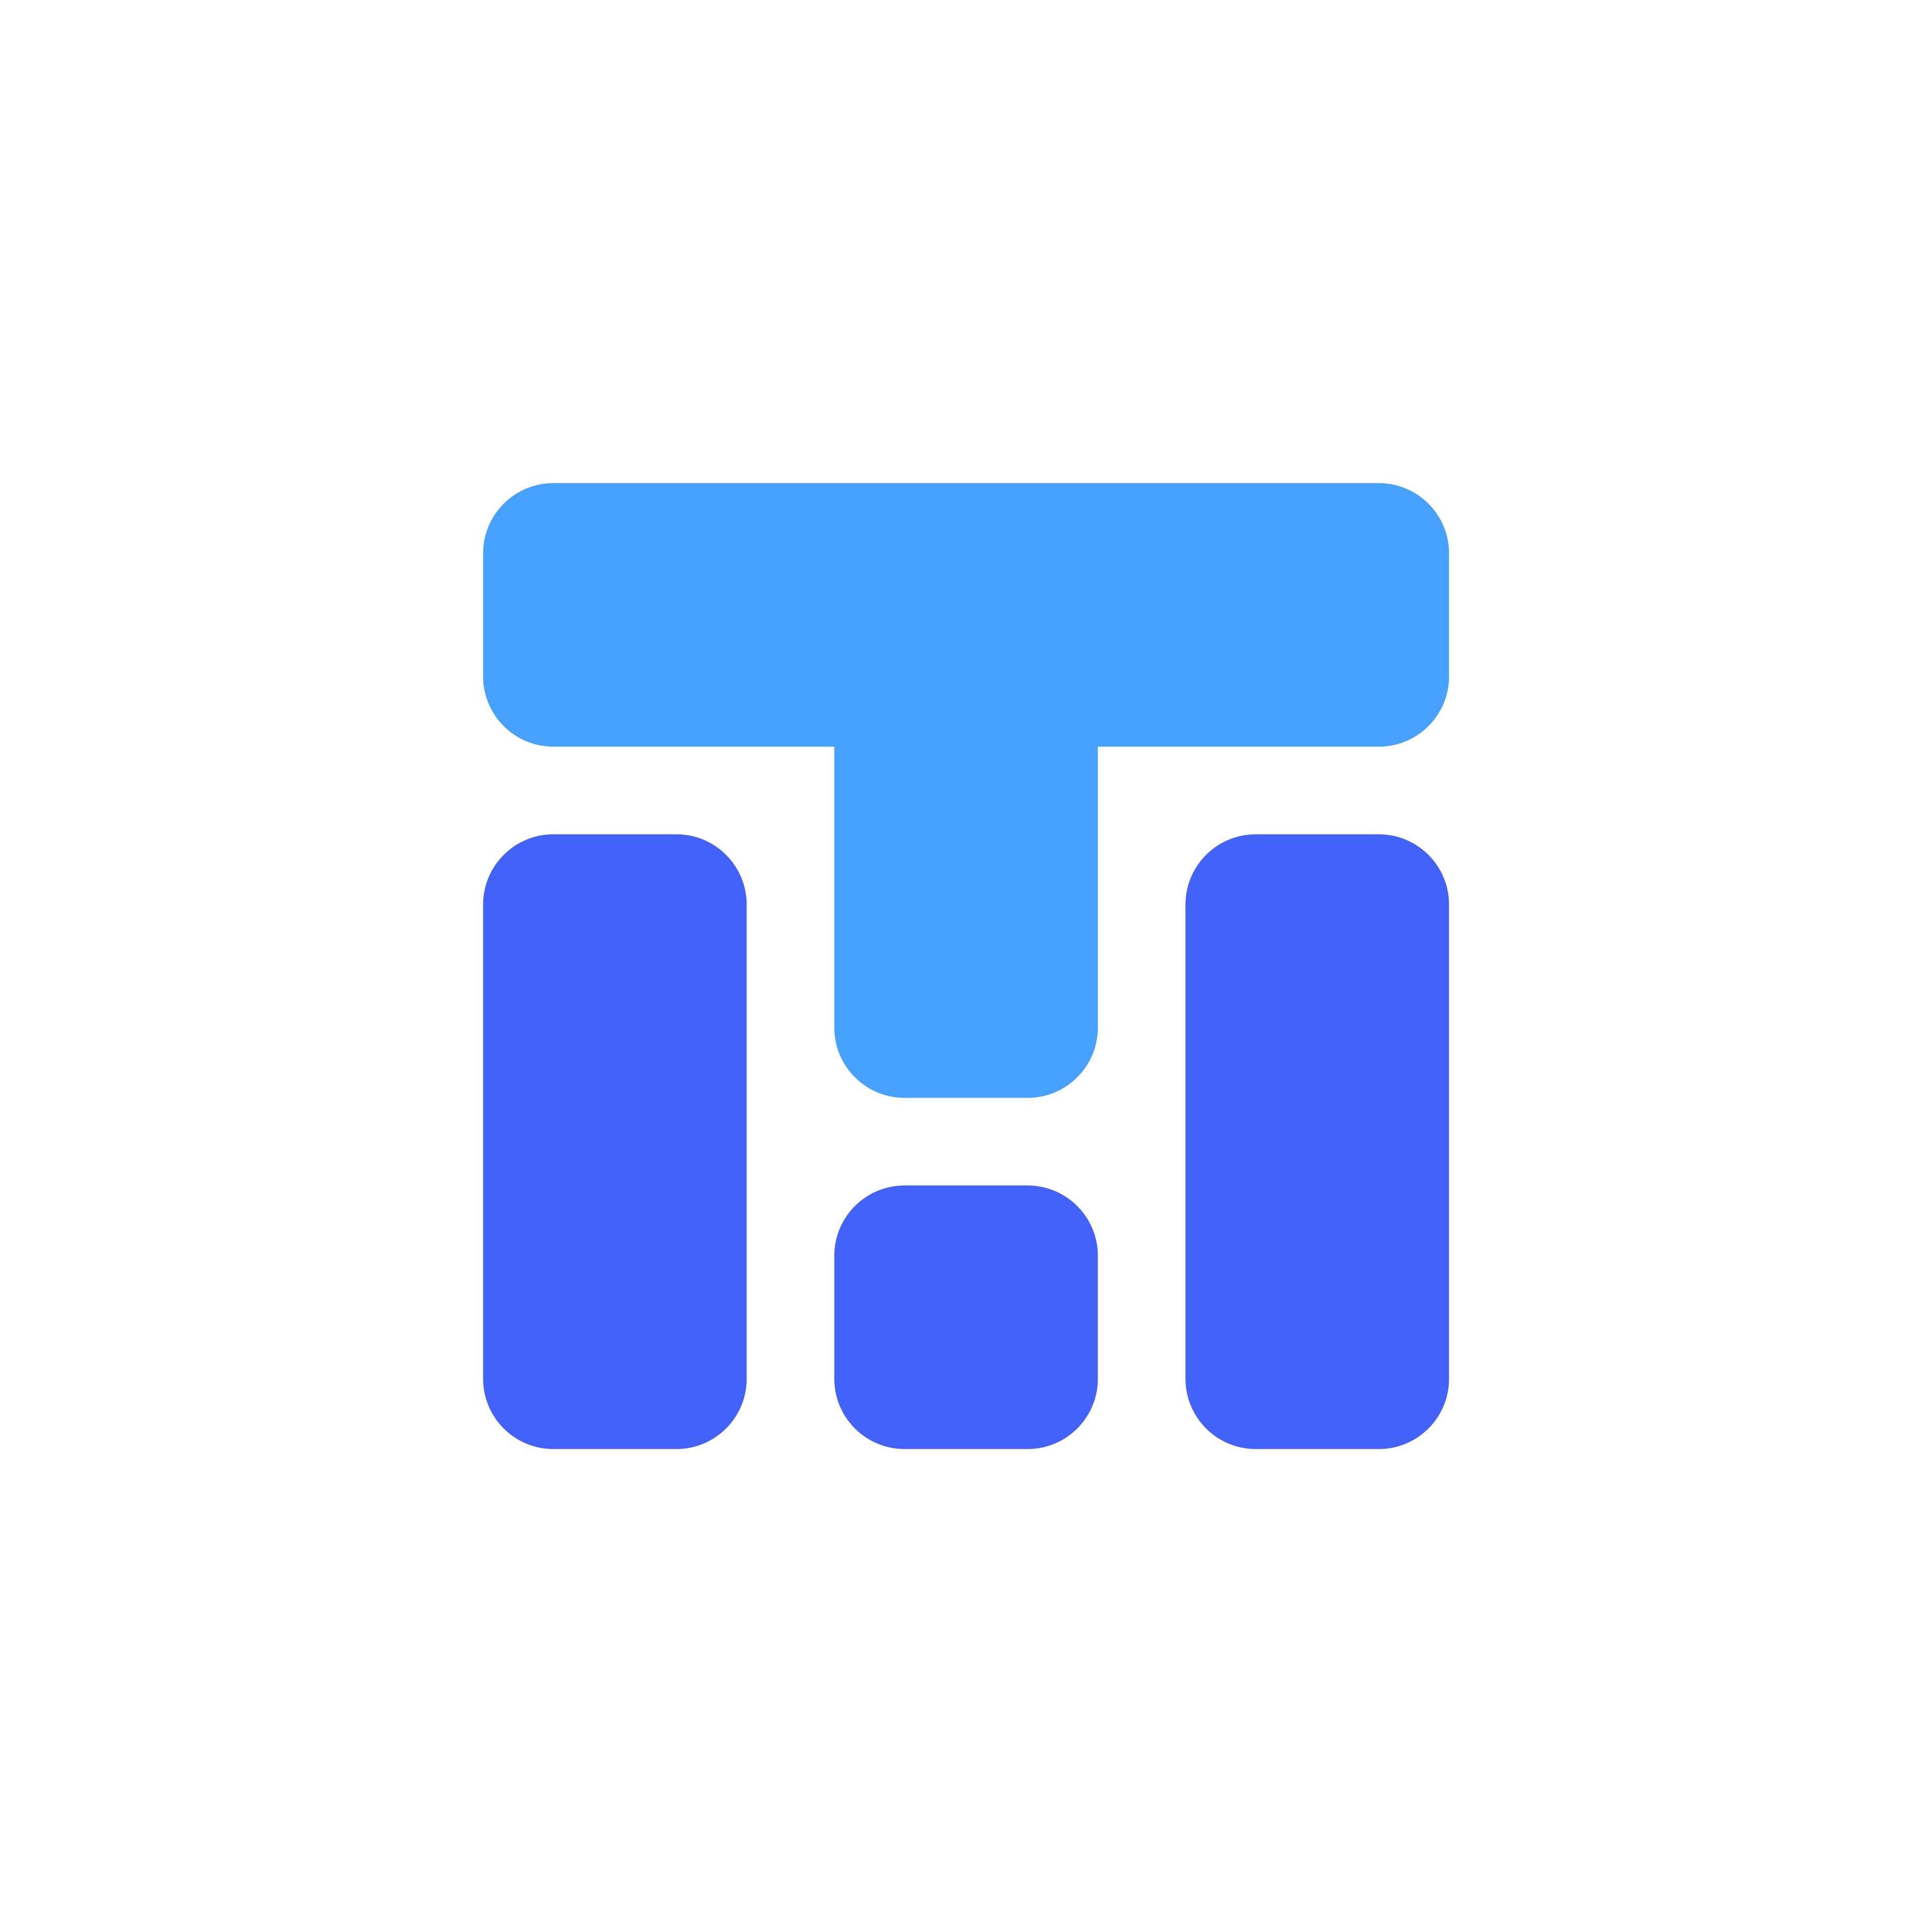 troweb logo icon